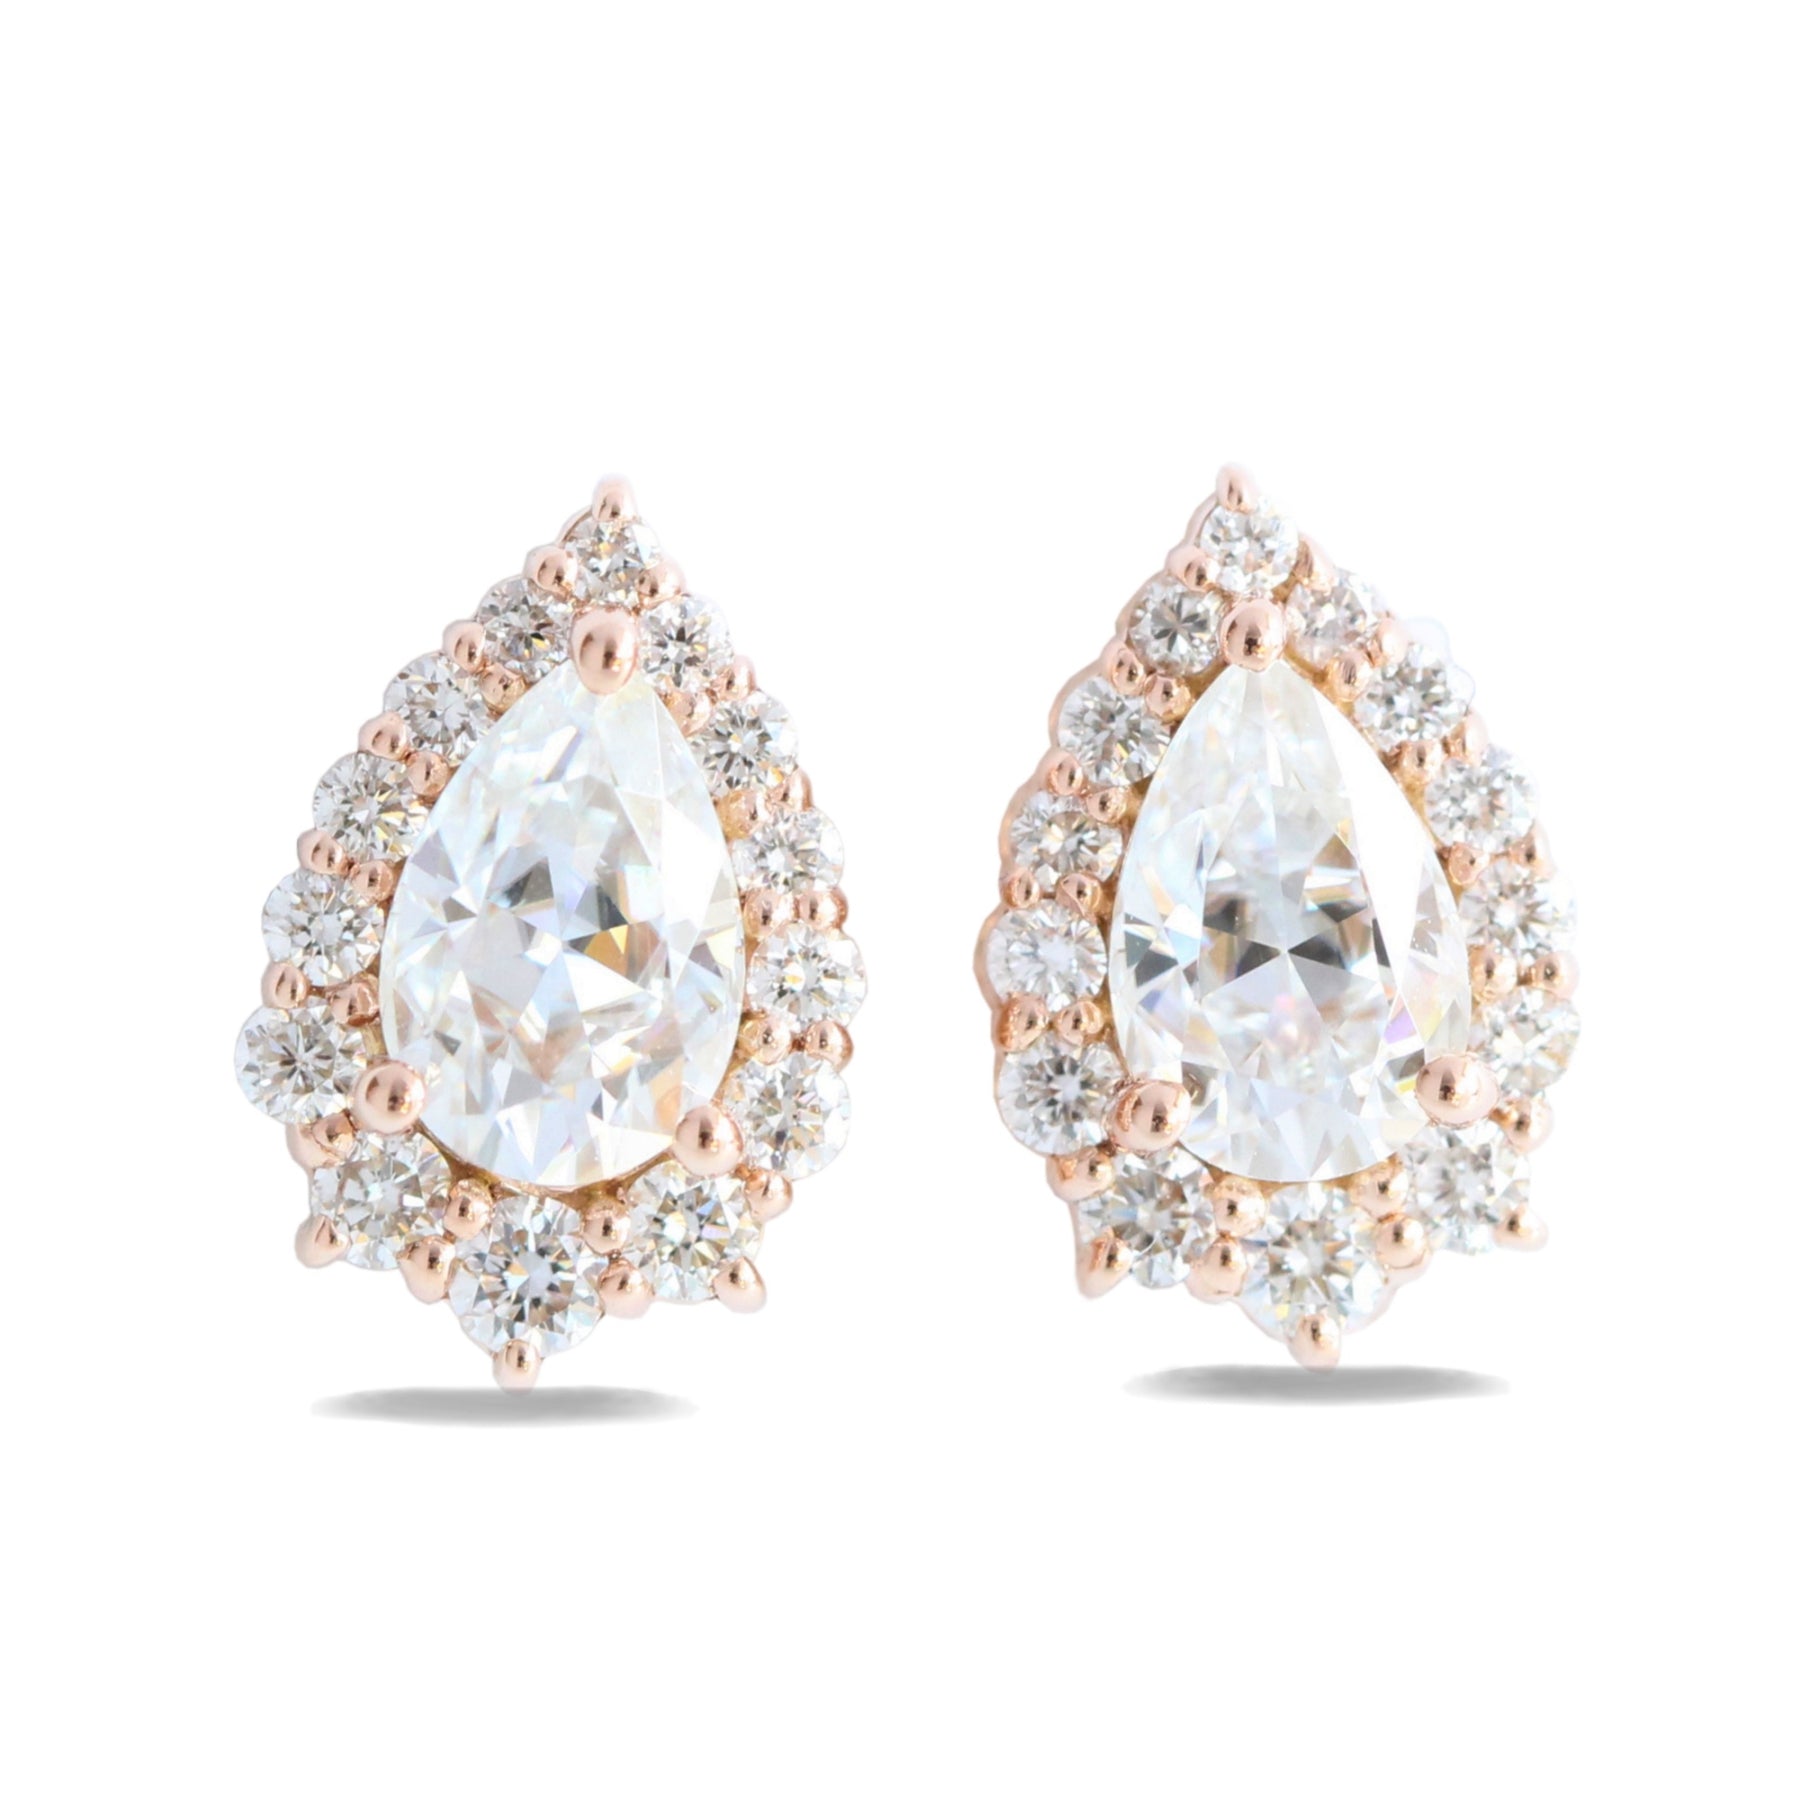 Tiara halo diamond pear moissanite earrings rose gold diamond studs la more design jewelry